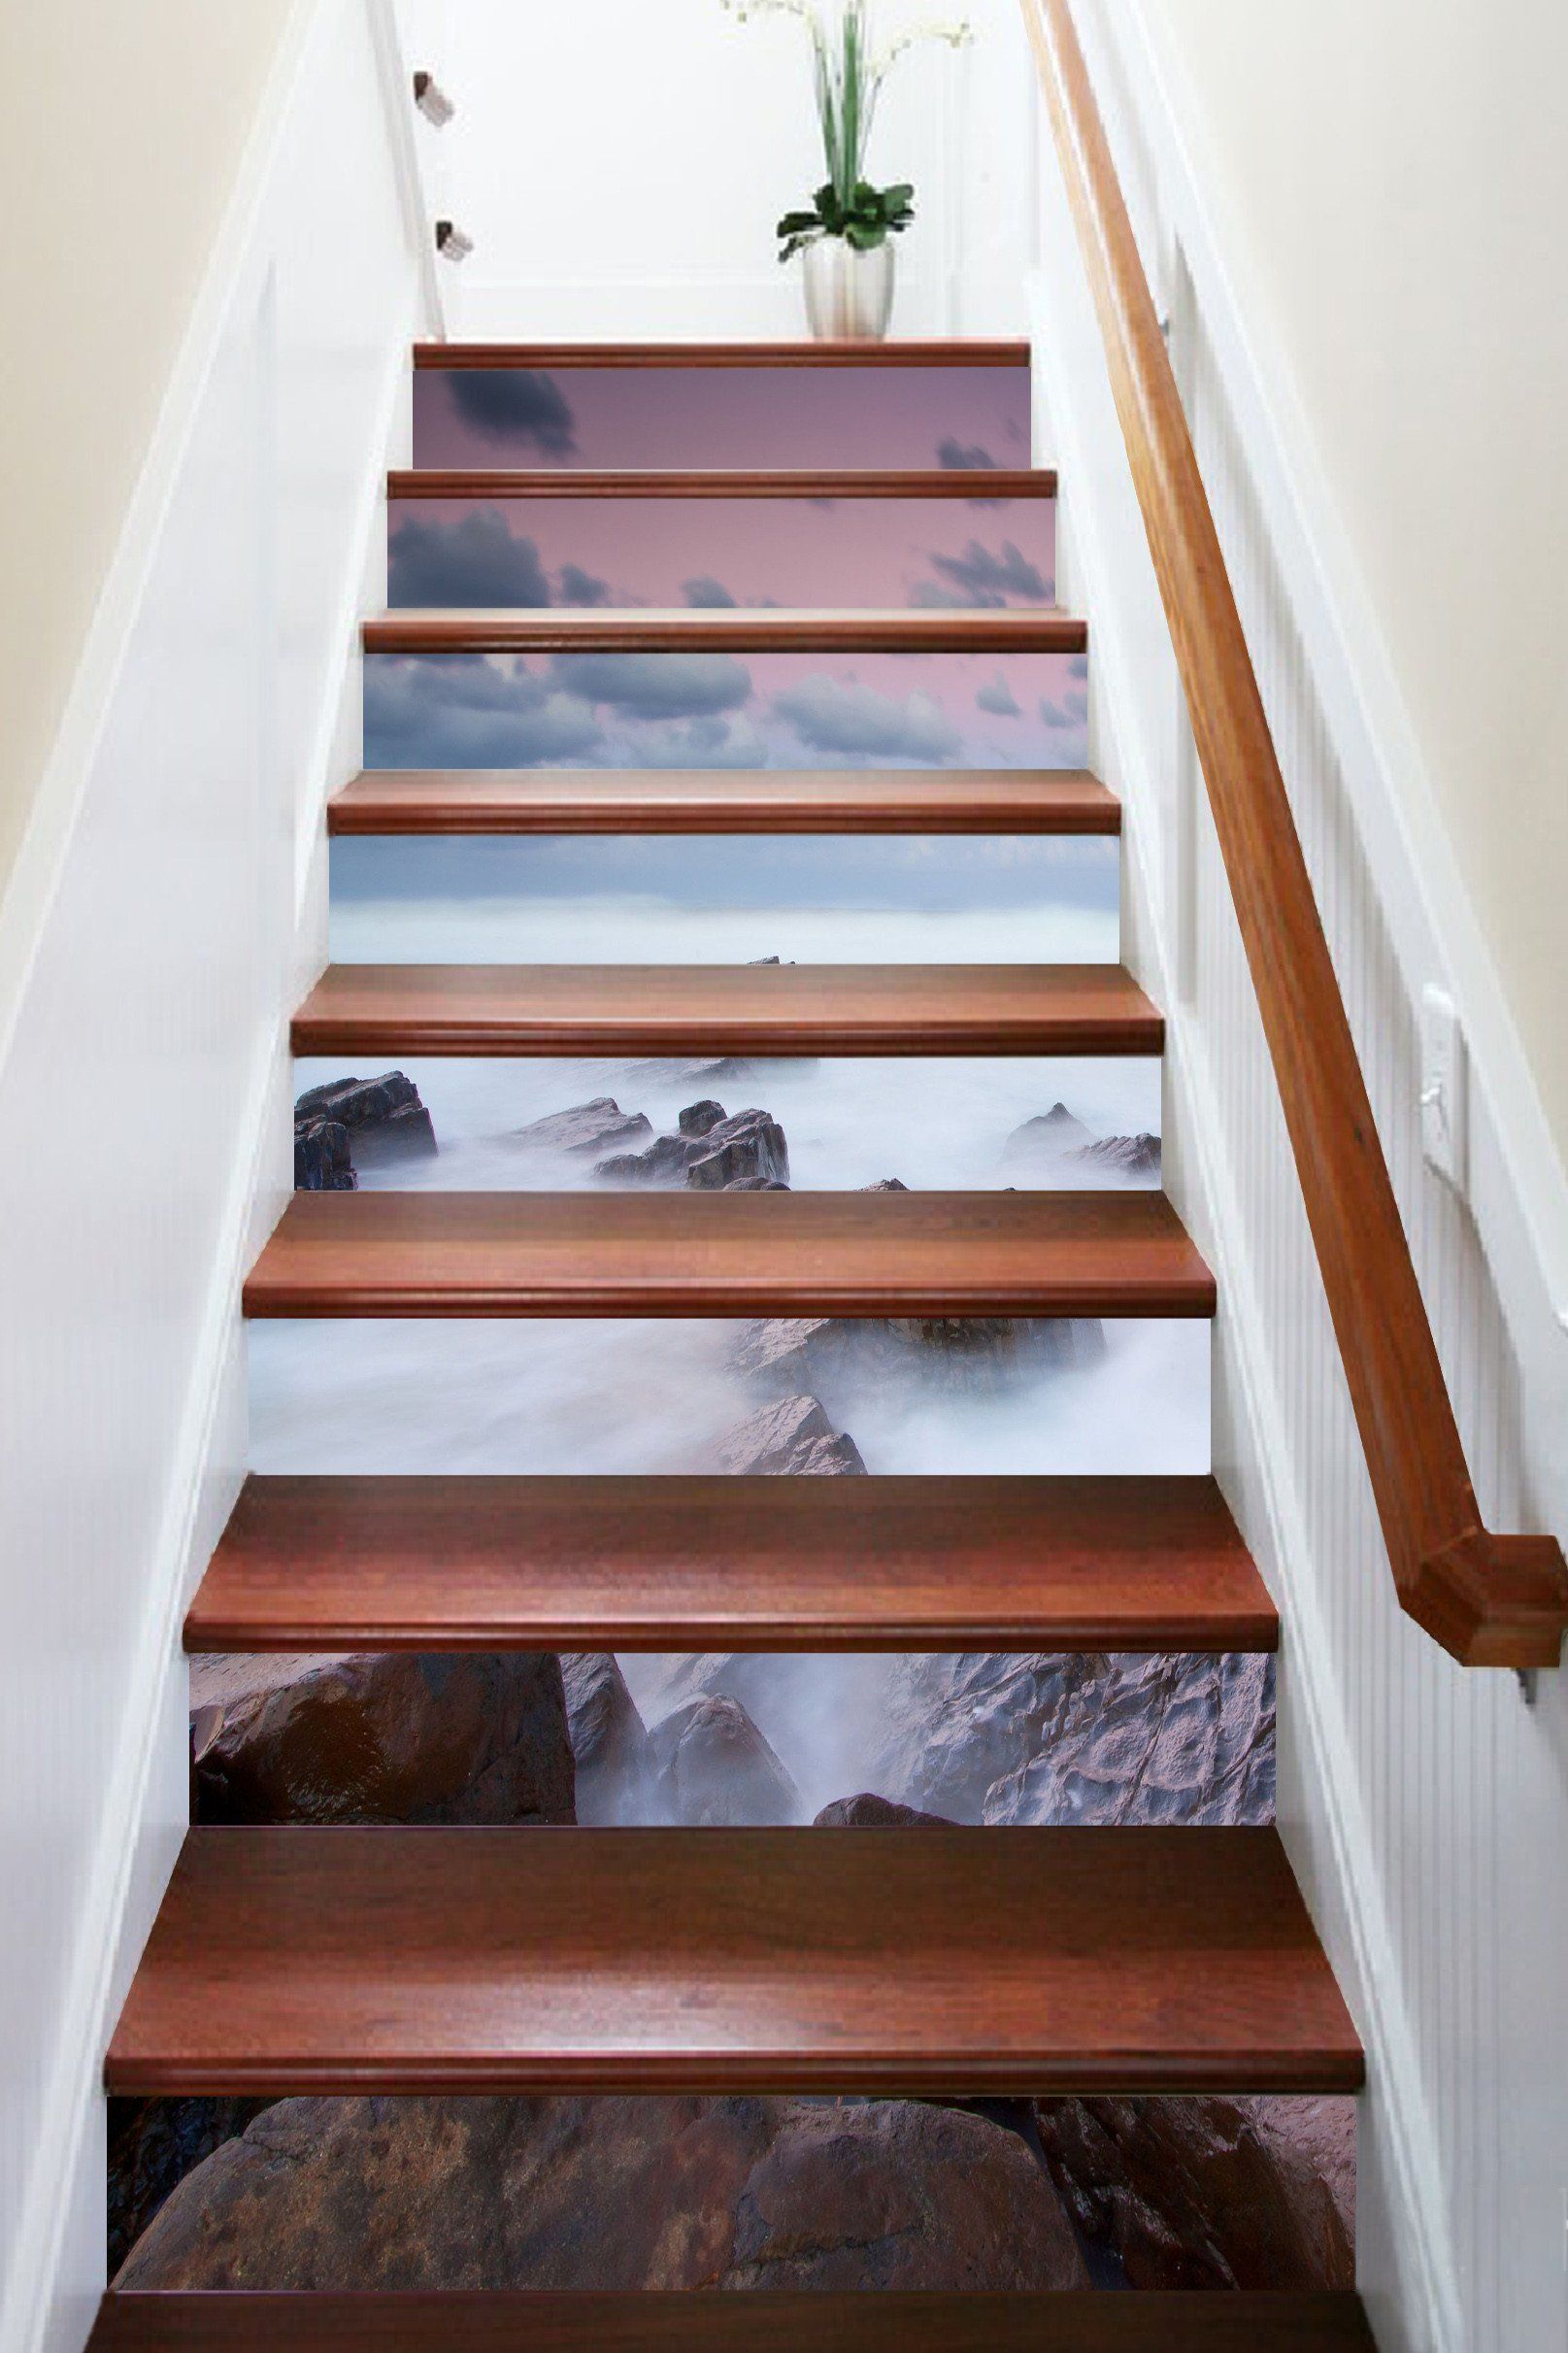 3D Misty Sea Stones 1567 Stair Risers Wallpaper AJ Wallpaper 